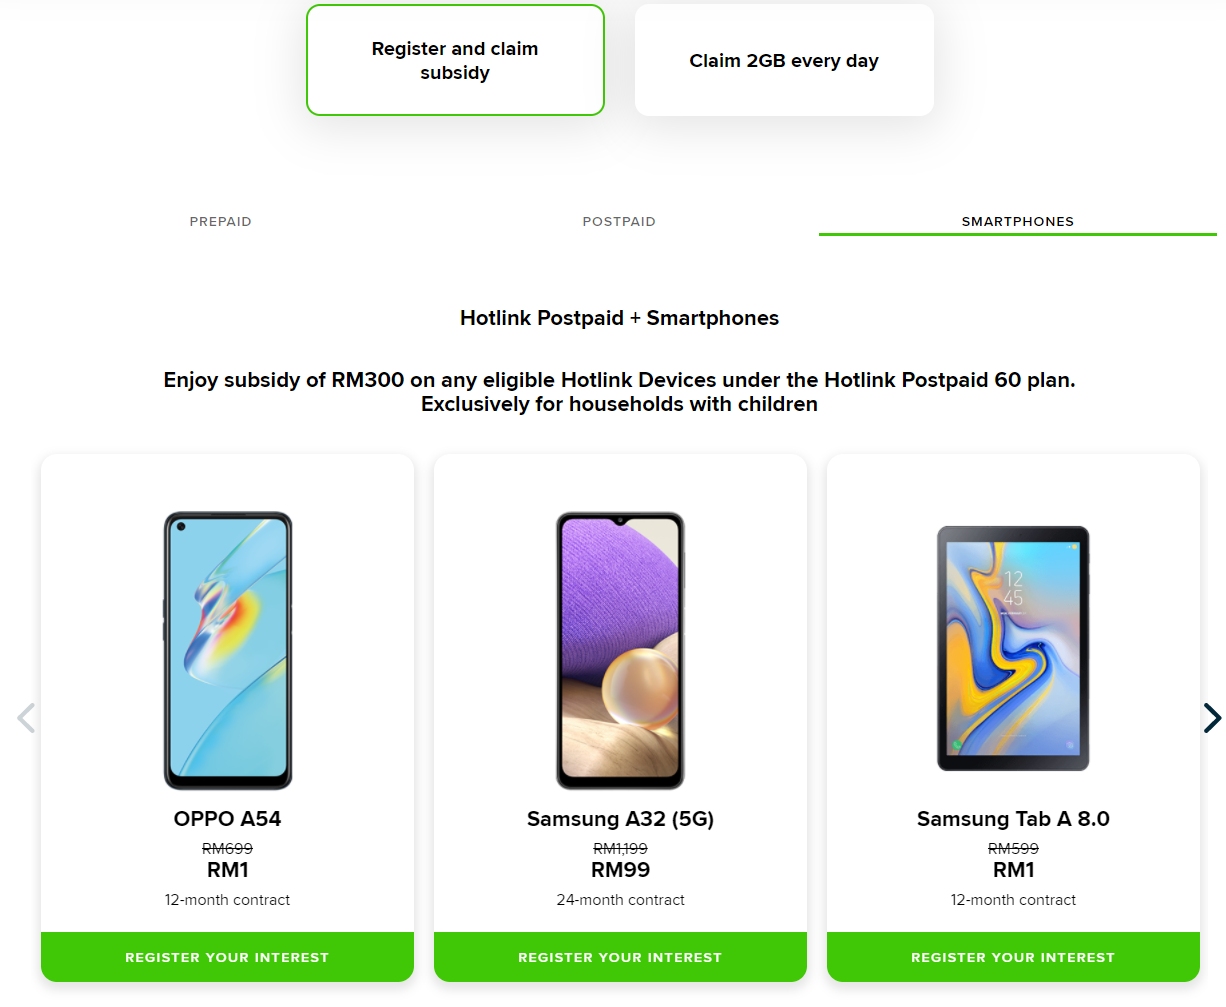 Prihatin phone maxis Maxis Business